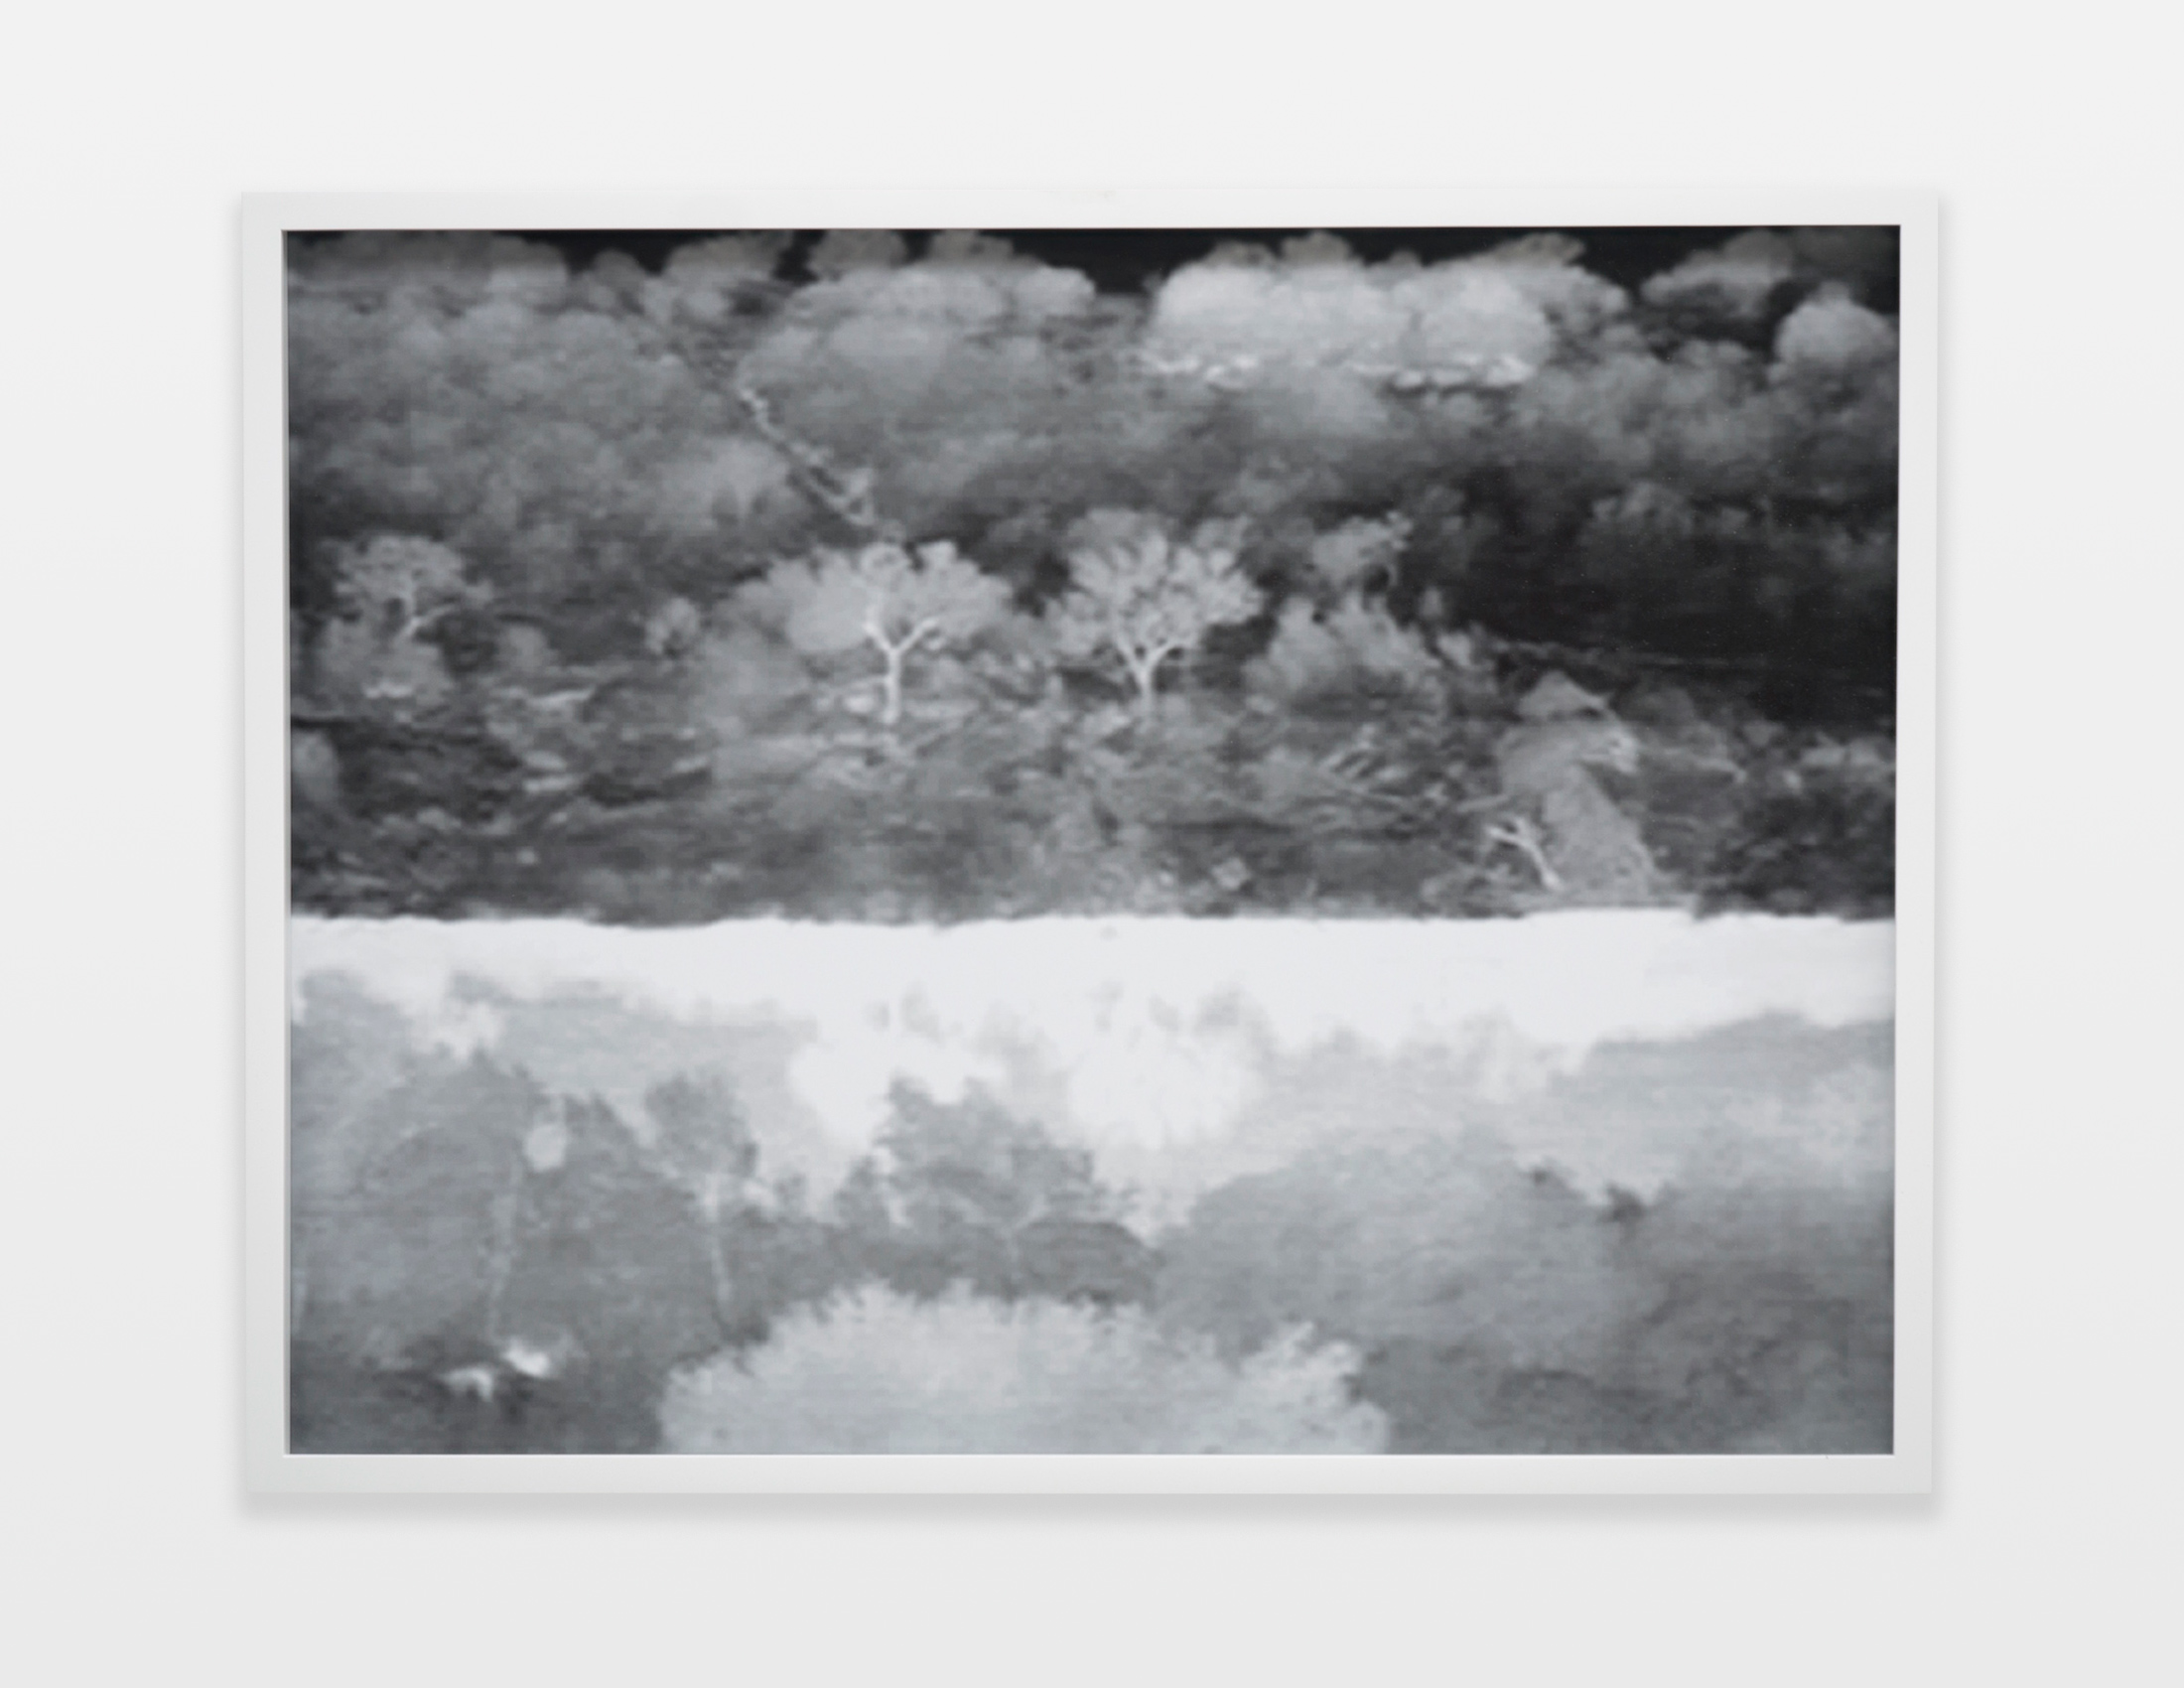 Barbara Ess, Reflection [Surveillance Series], 2011-2019, archival pigment print, 20.81h x 26.38w in.